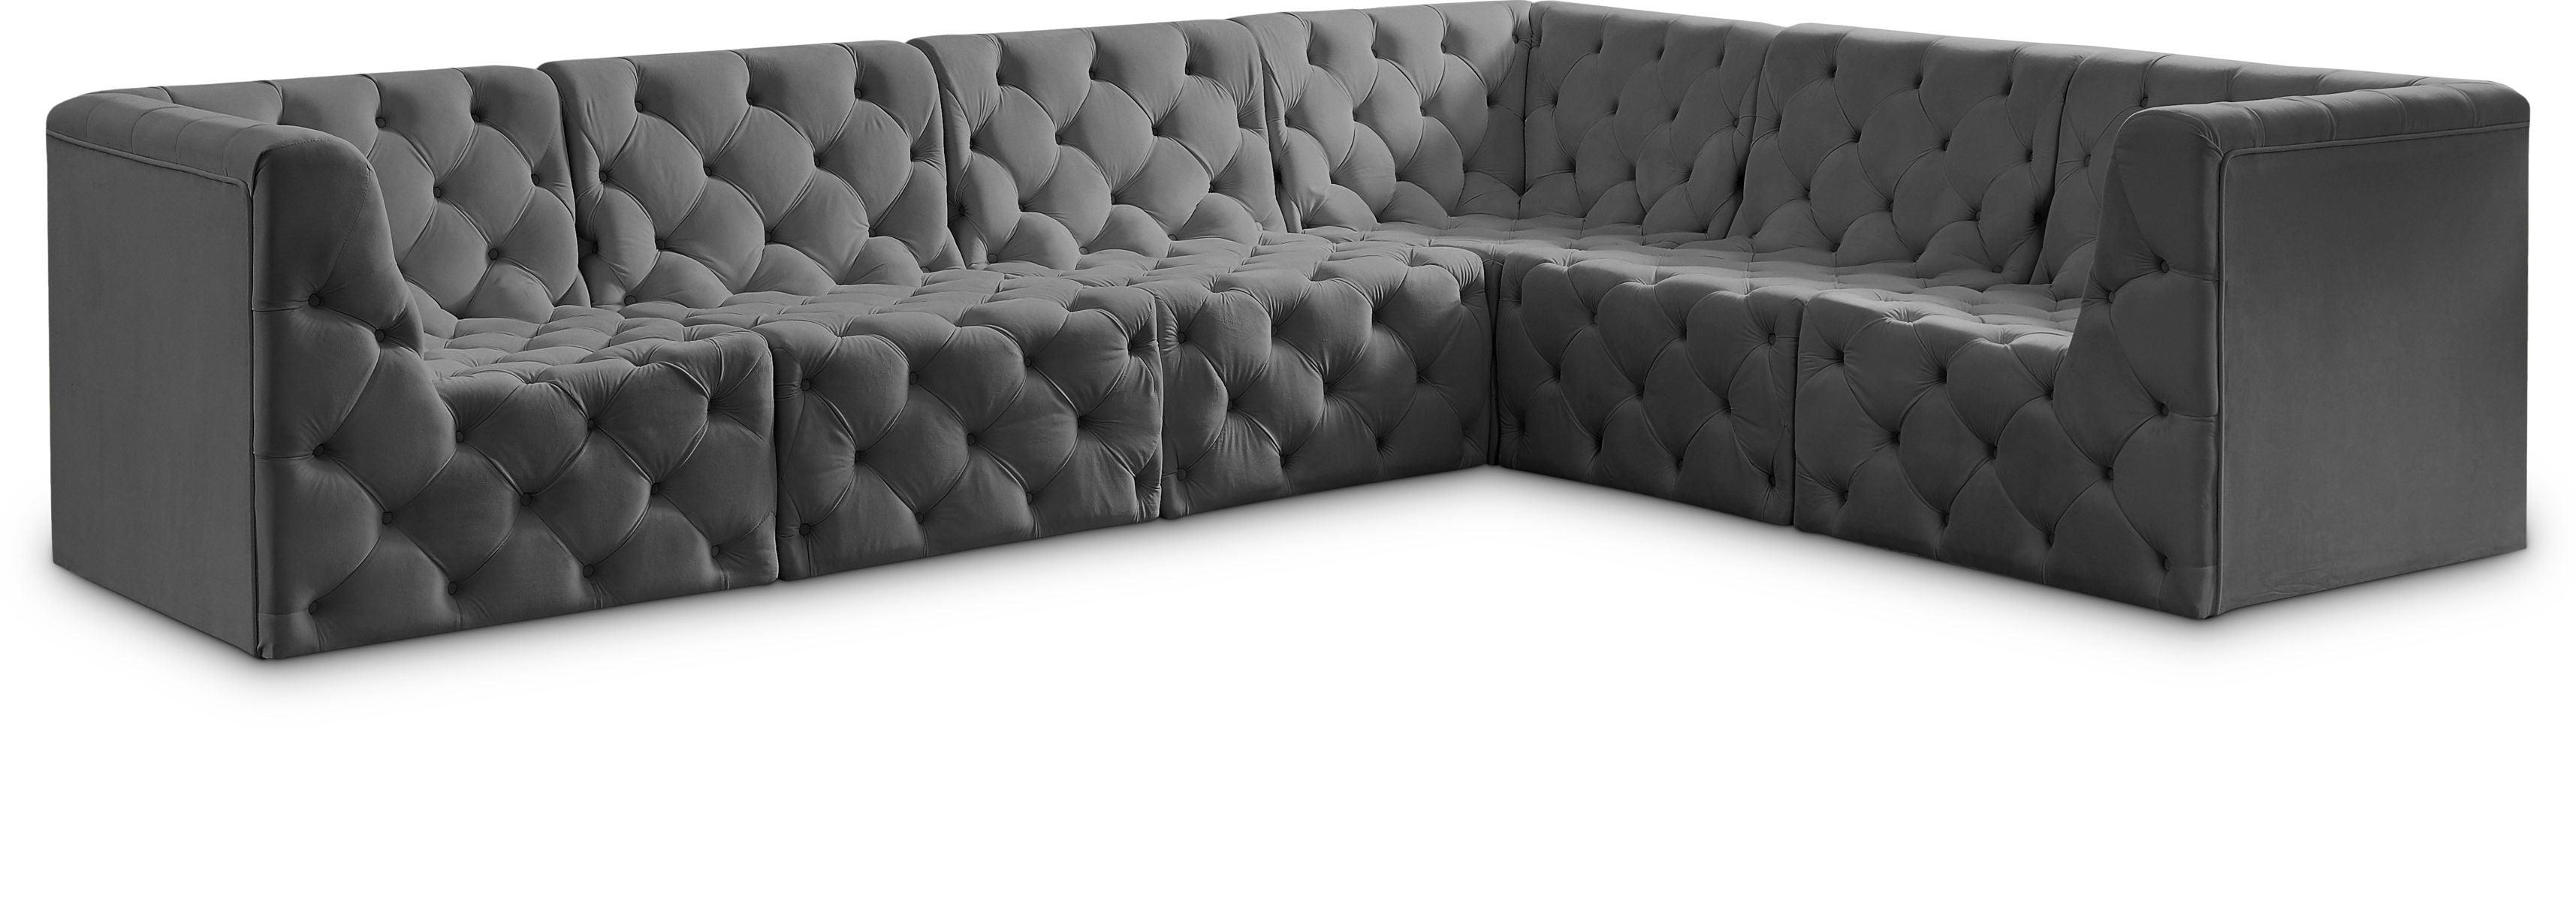 Meridian Furniture - Tuft - Modular Sectional 6 Piece - Gray - Fabric - 5th Avenue Furniture